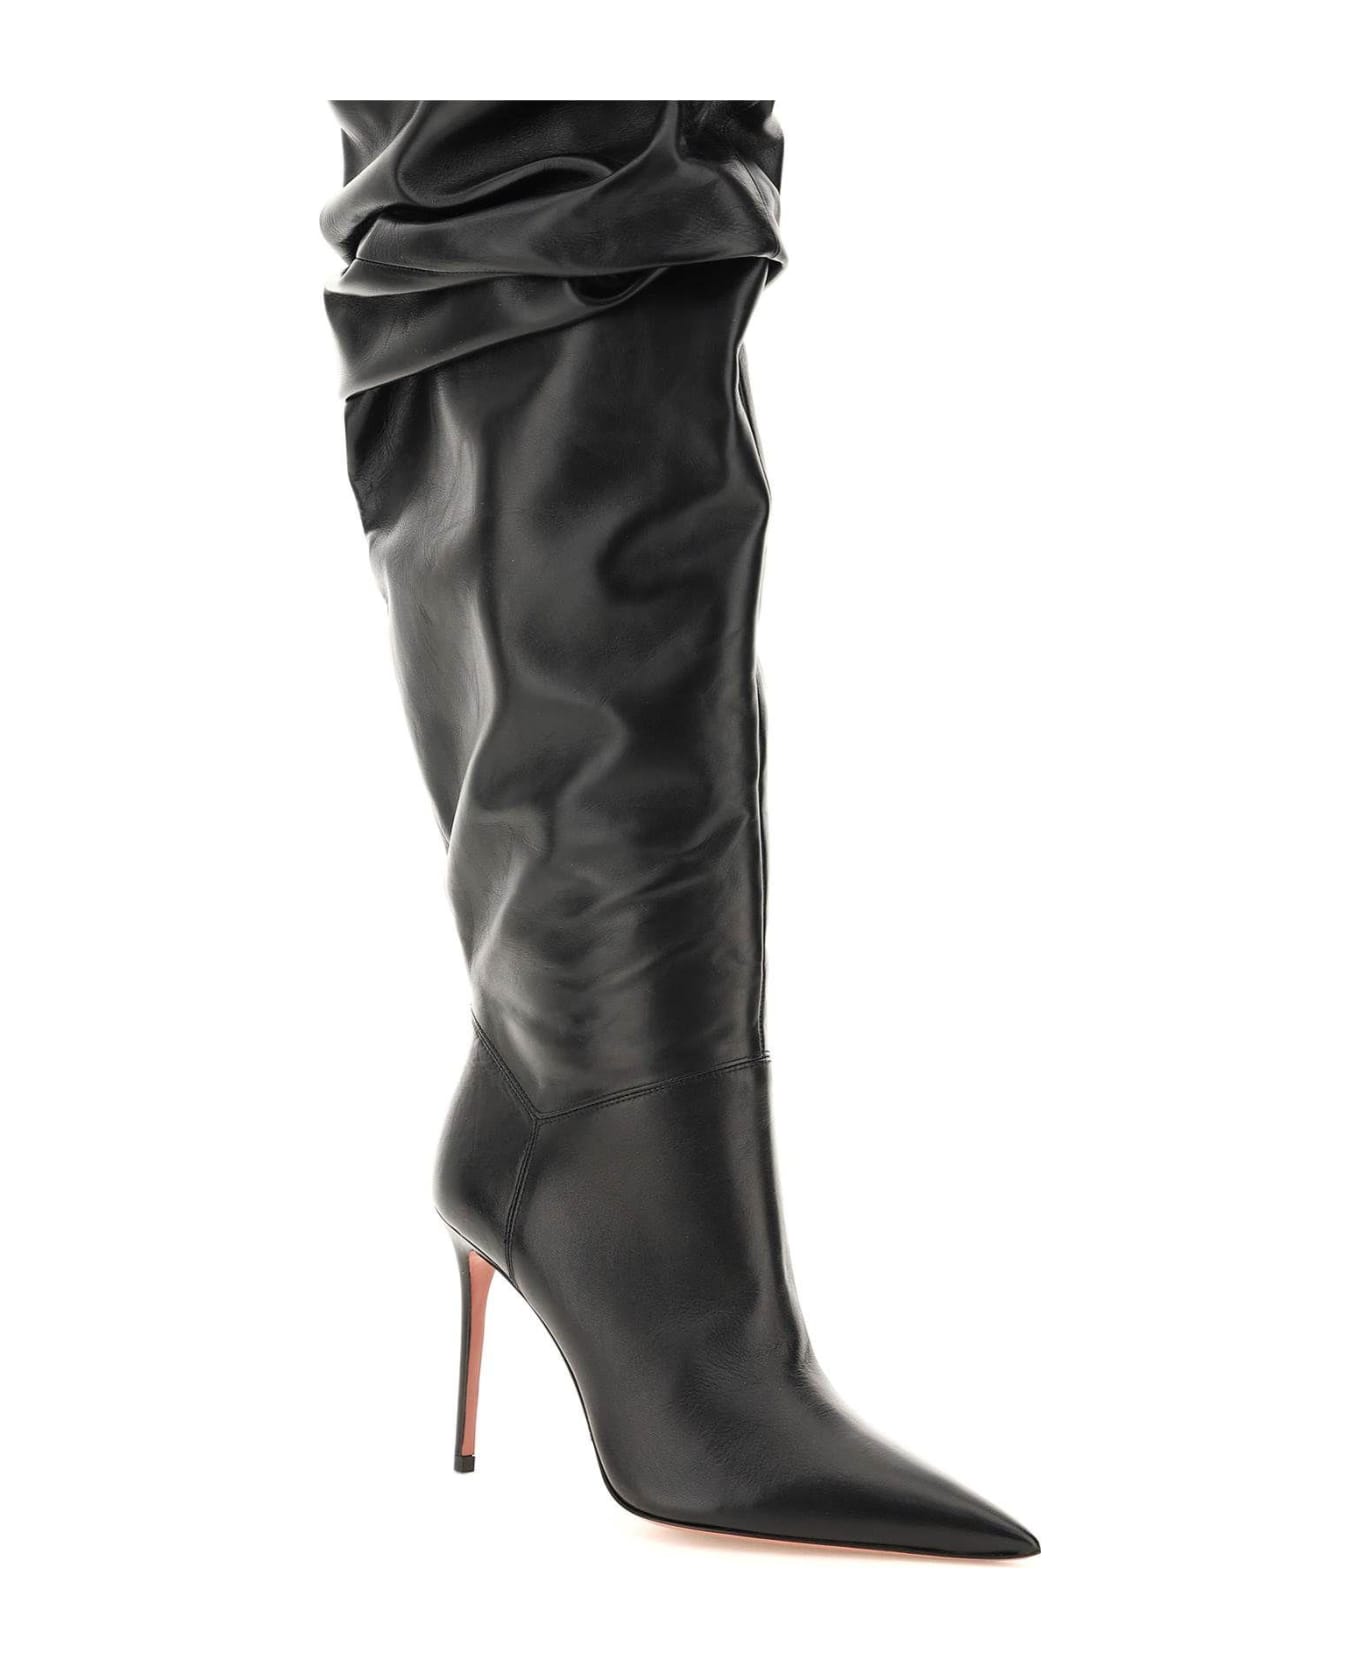 Amina Muaddi Jahleel Thigh-high Boots - Black ブーツ